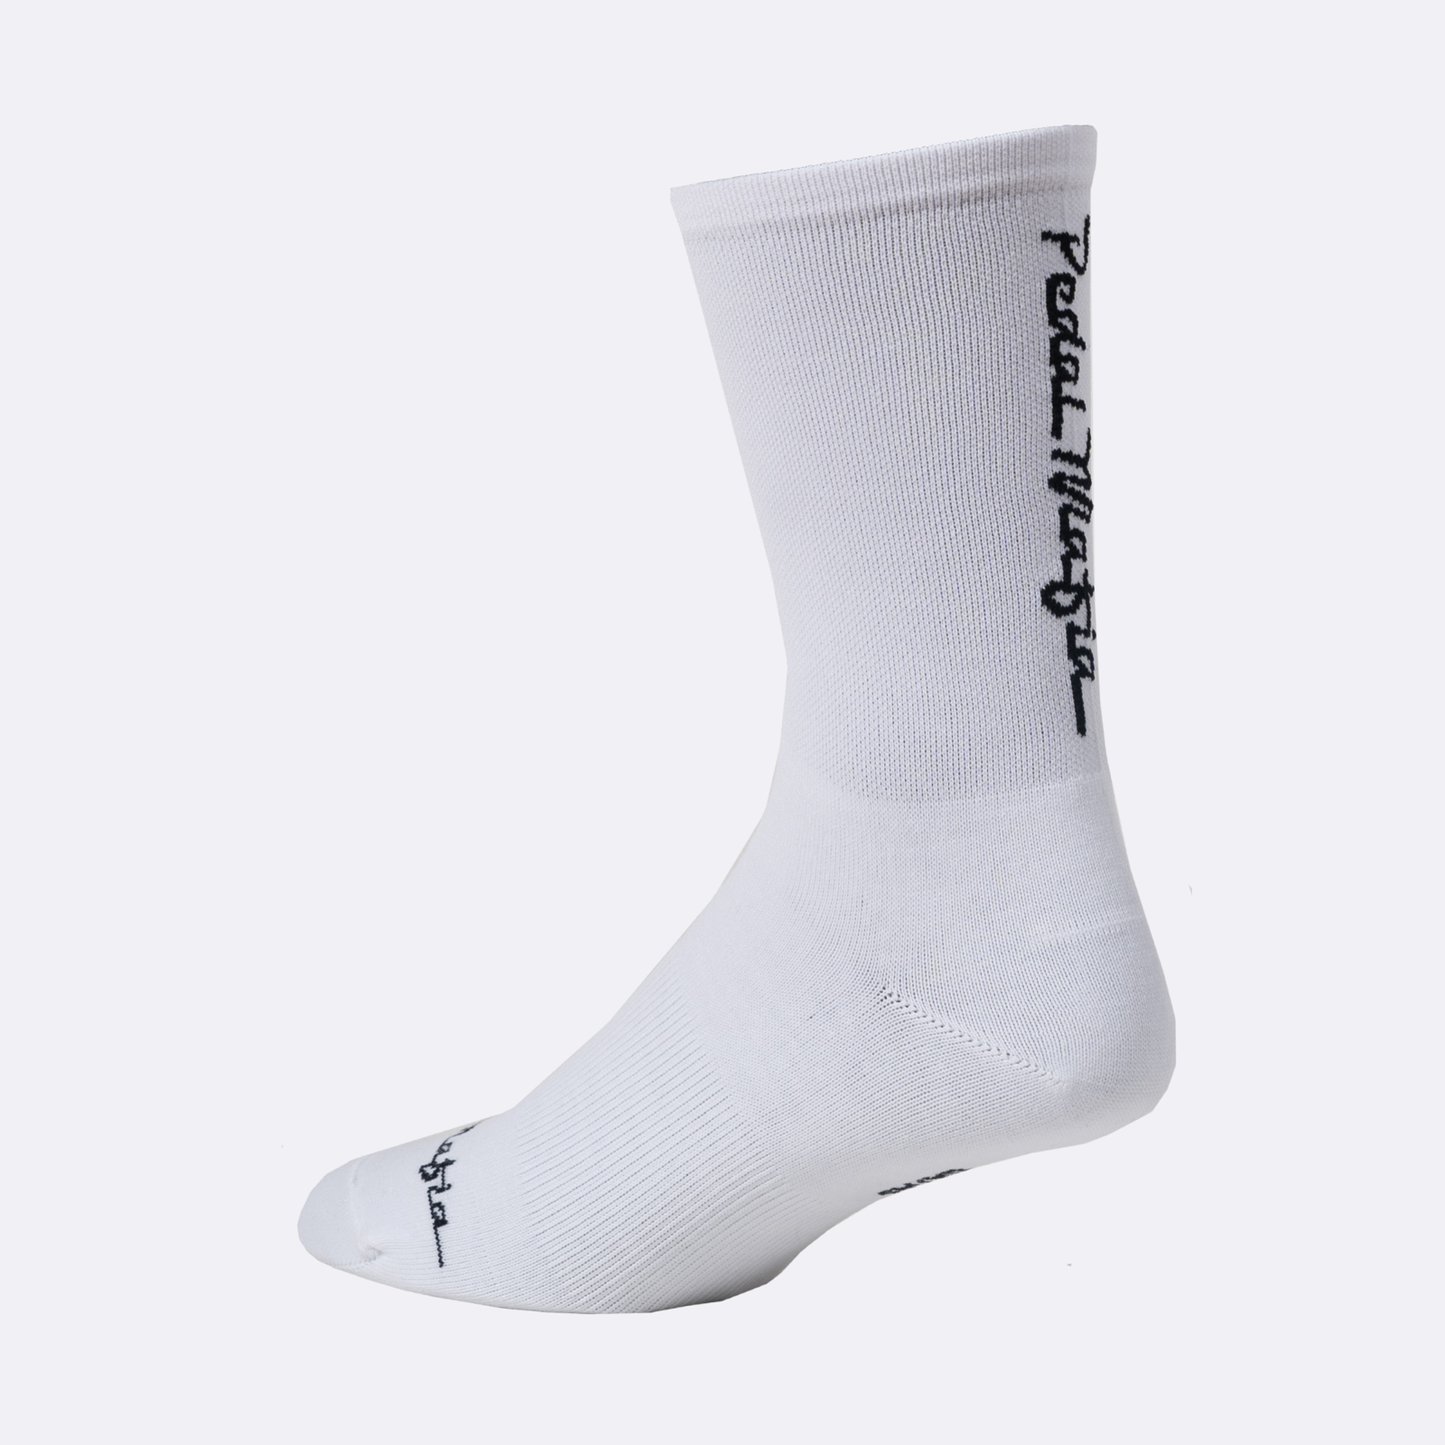 Pro Sock - White Black 2.0